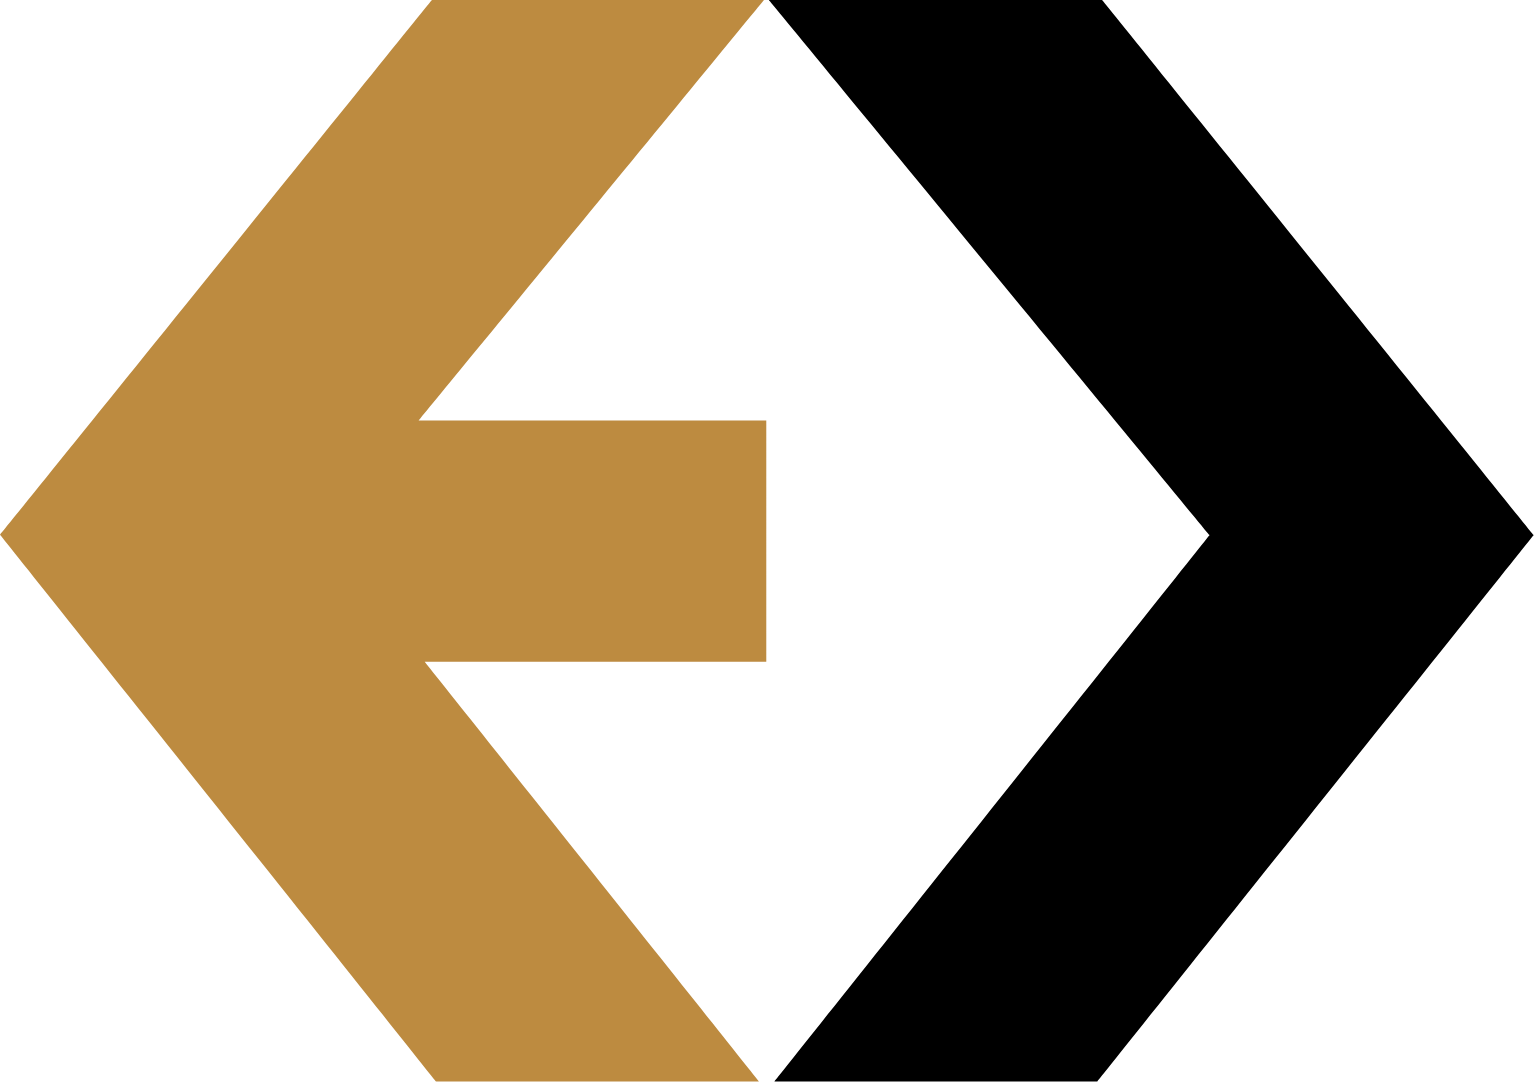 EnLink Midstream logo in transparent PNG and vectorized SVG formats